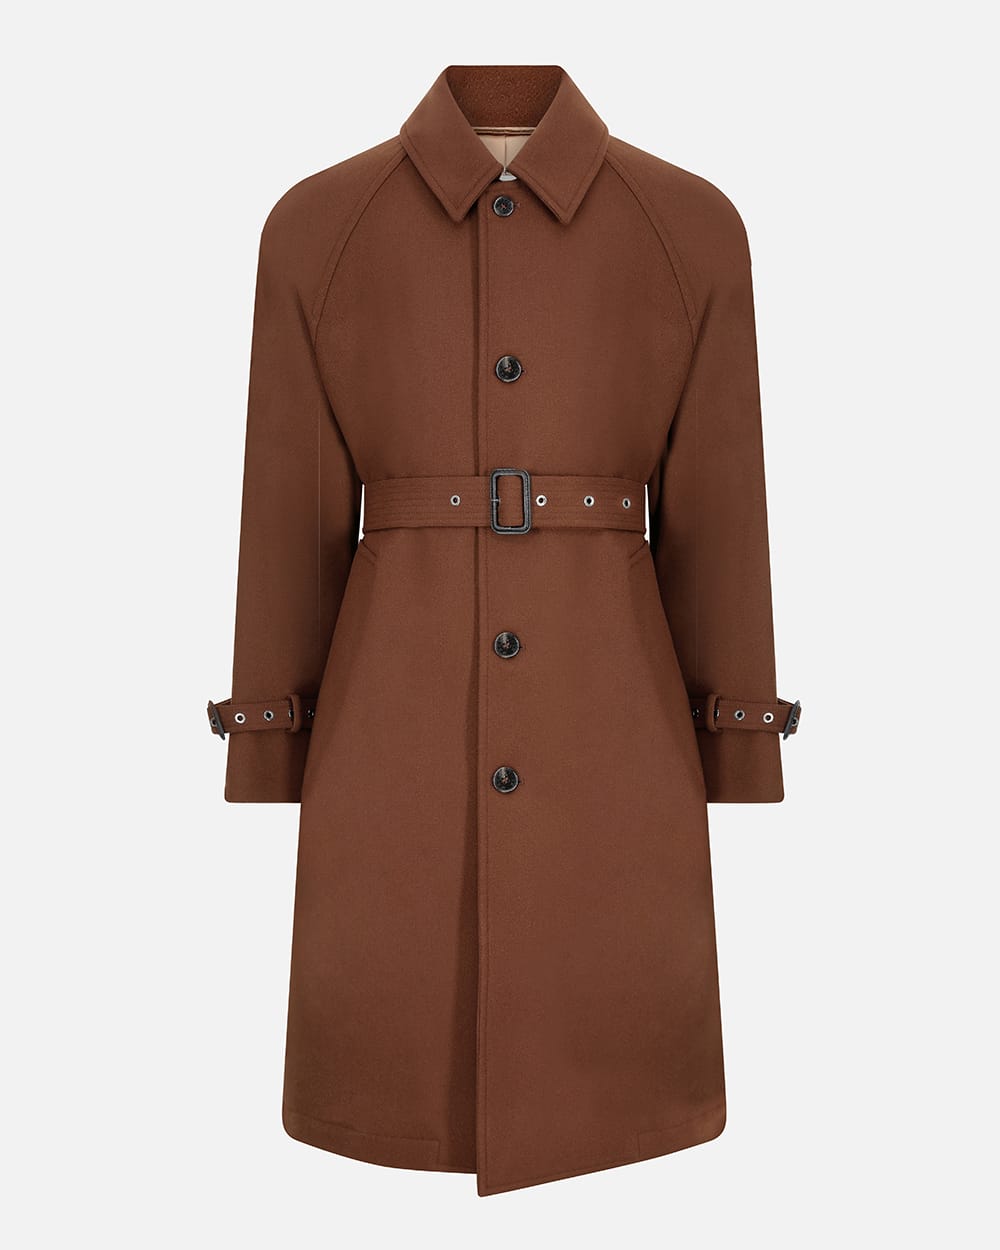 Ladies' overcoat in brown